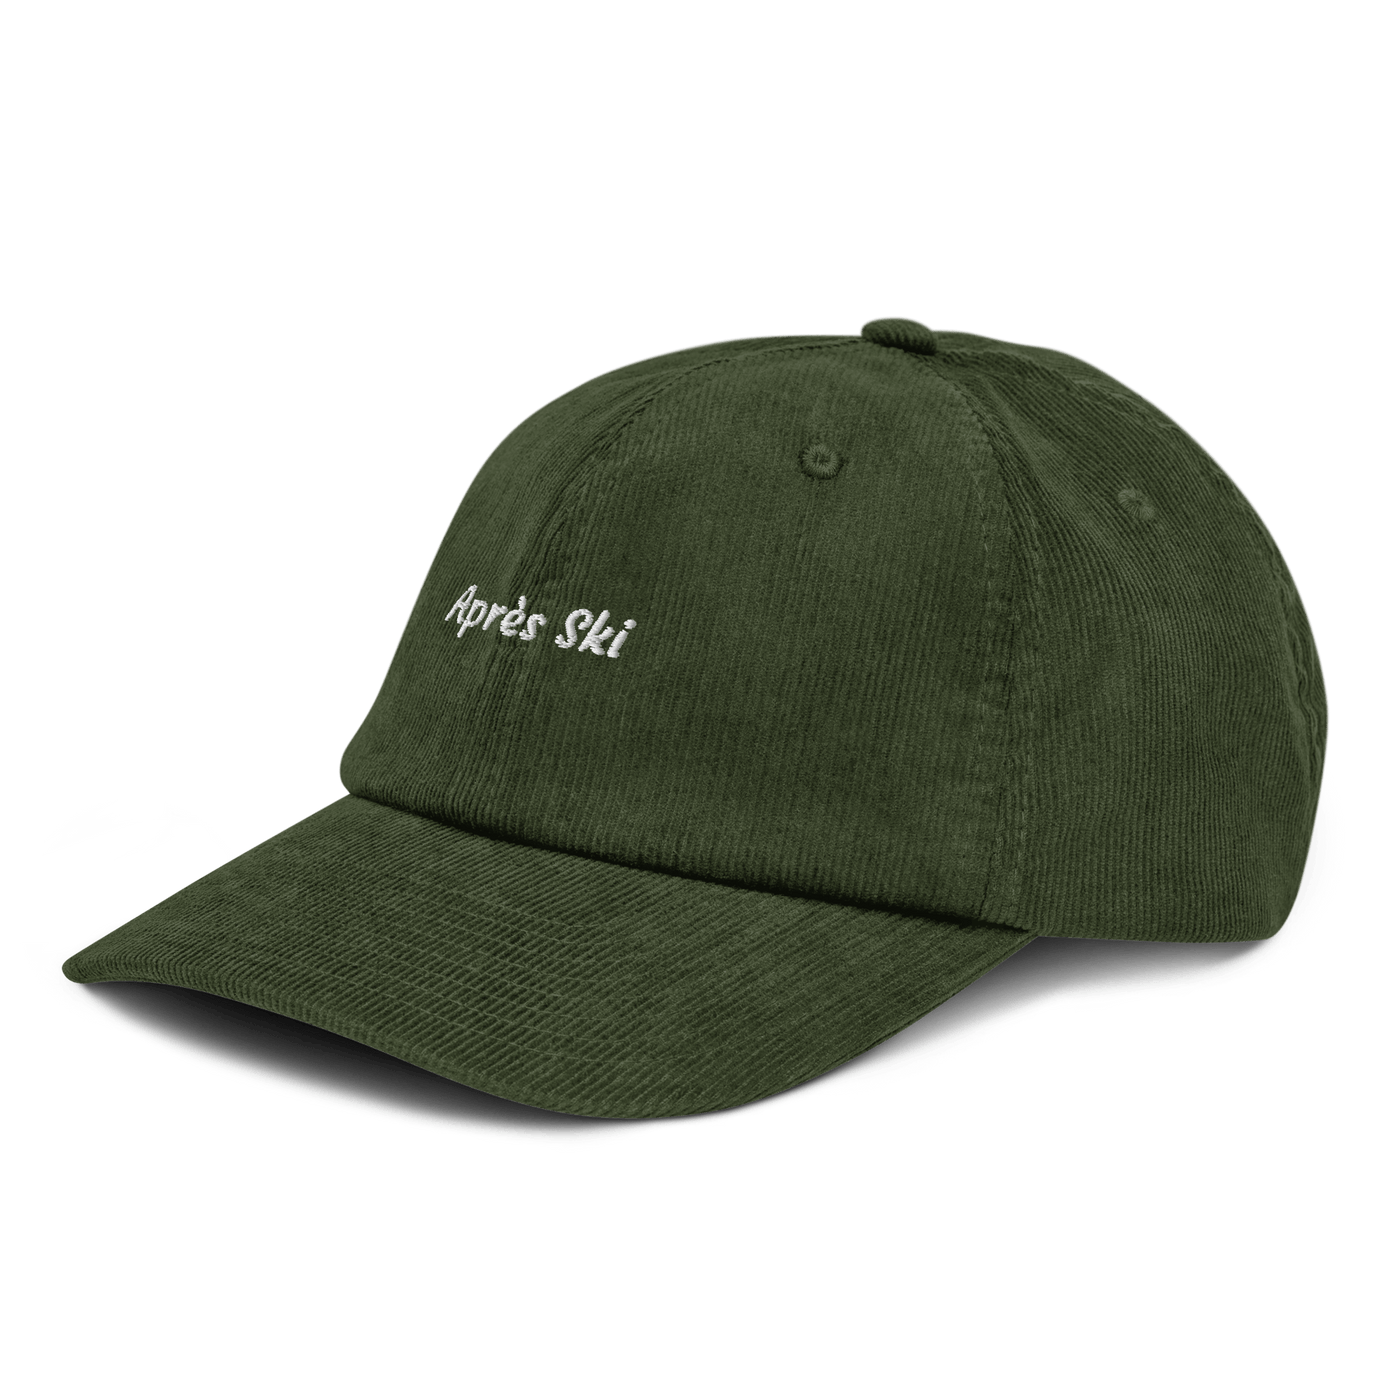 Après Ski Corduroy hat - Dark Olive - - Just Another Cap Store